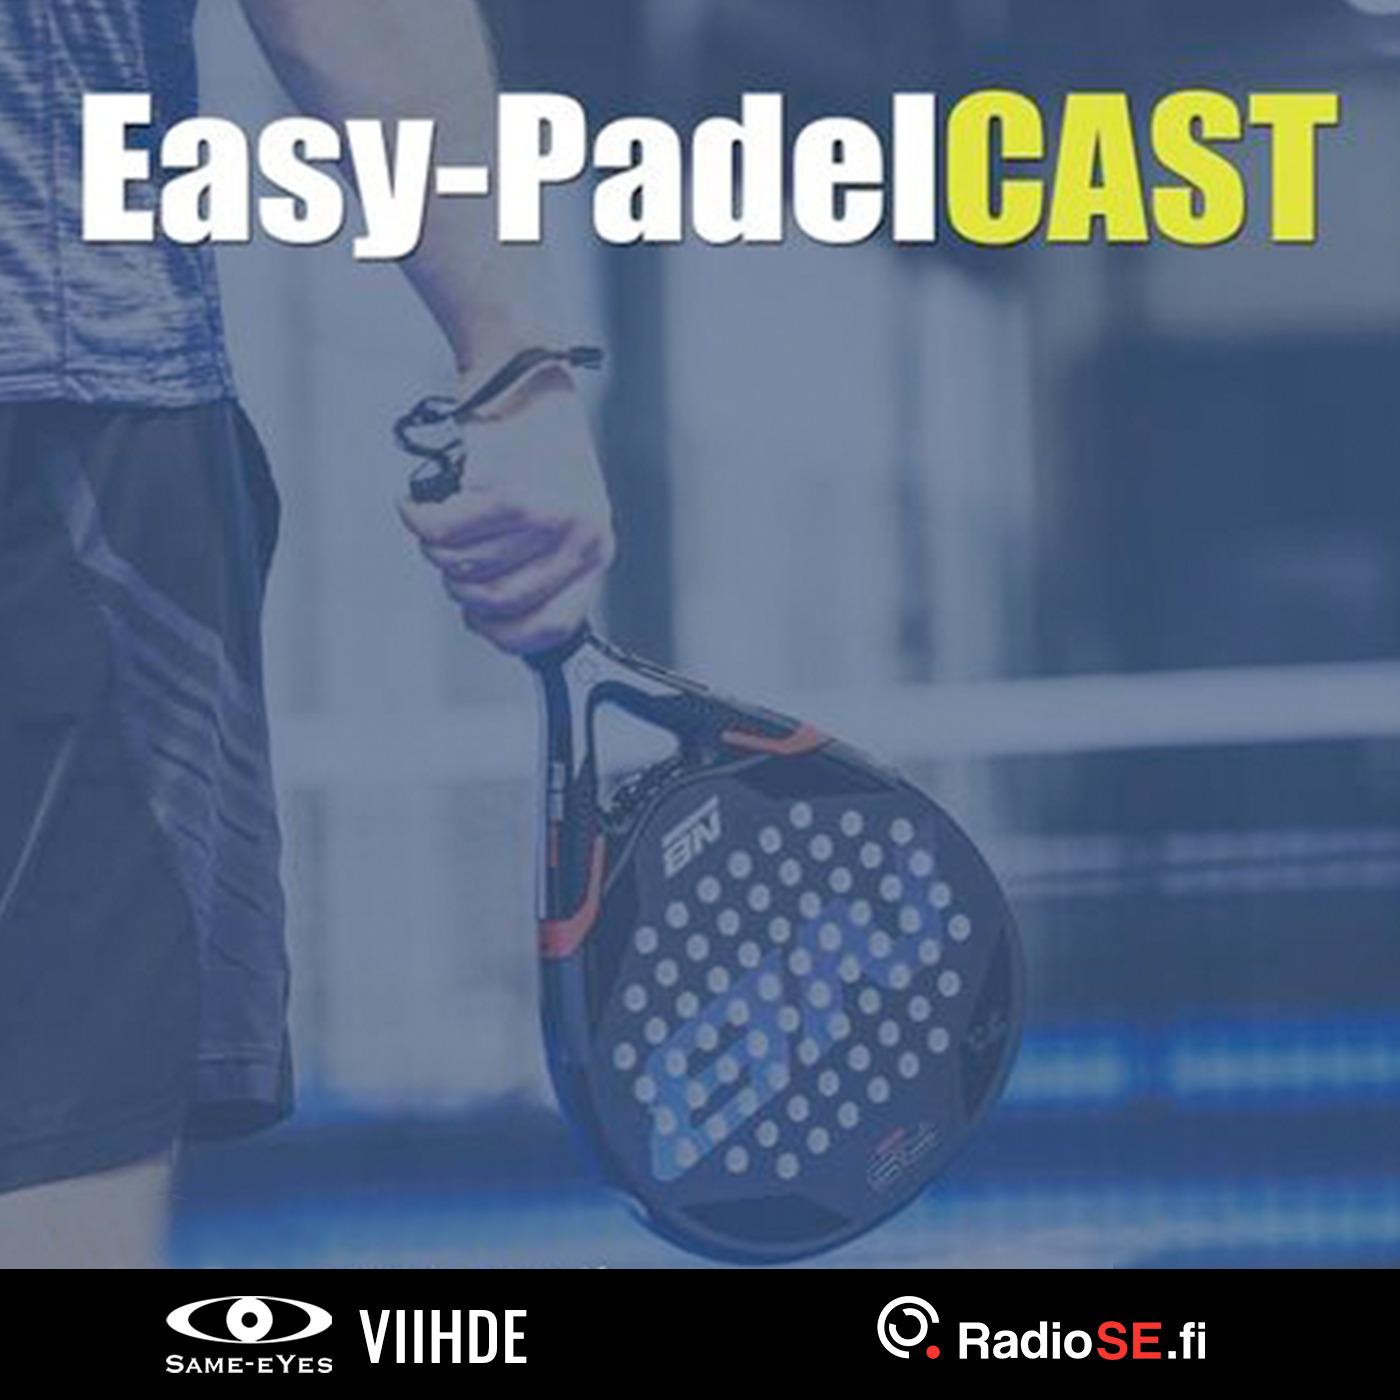 Easy-Padel CAST logo